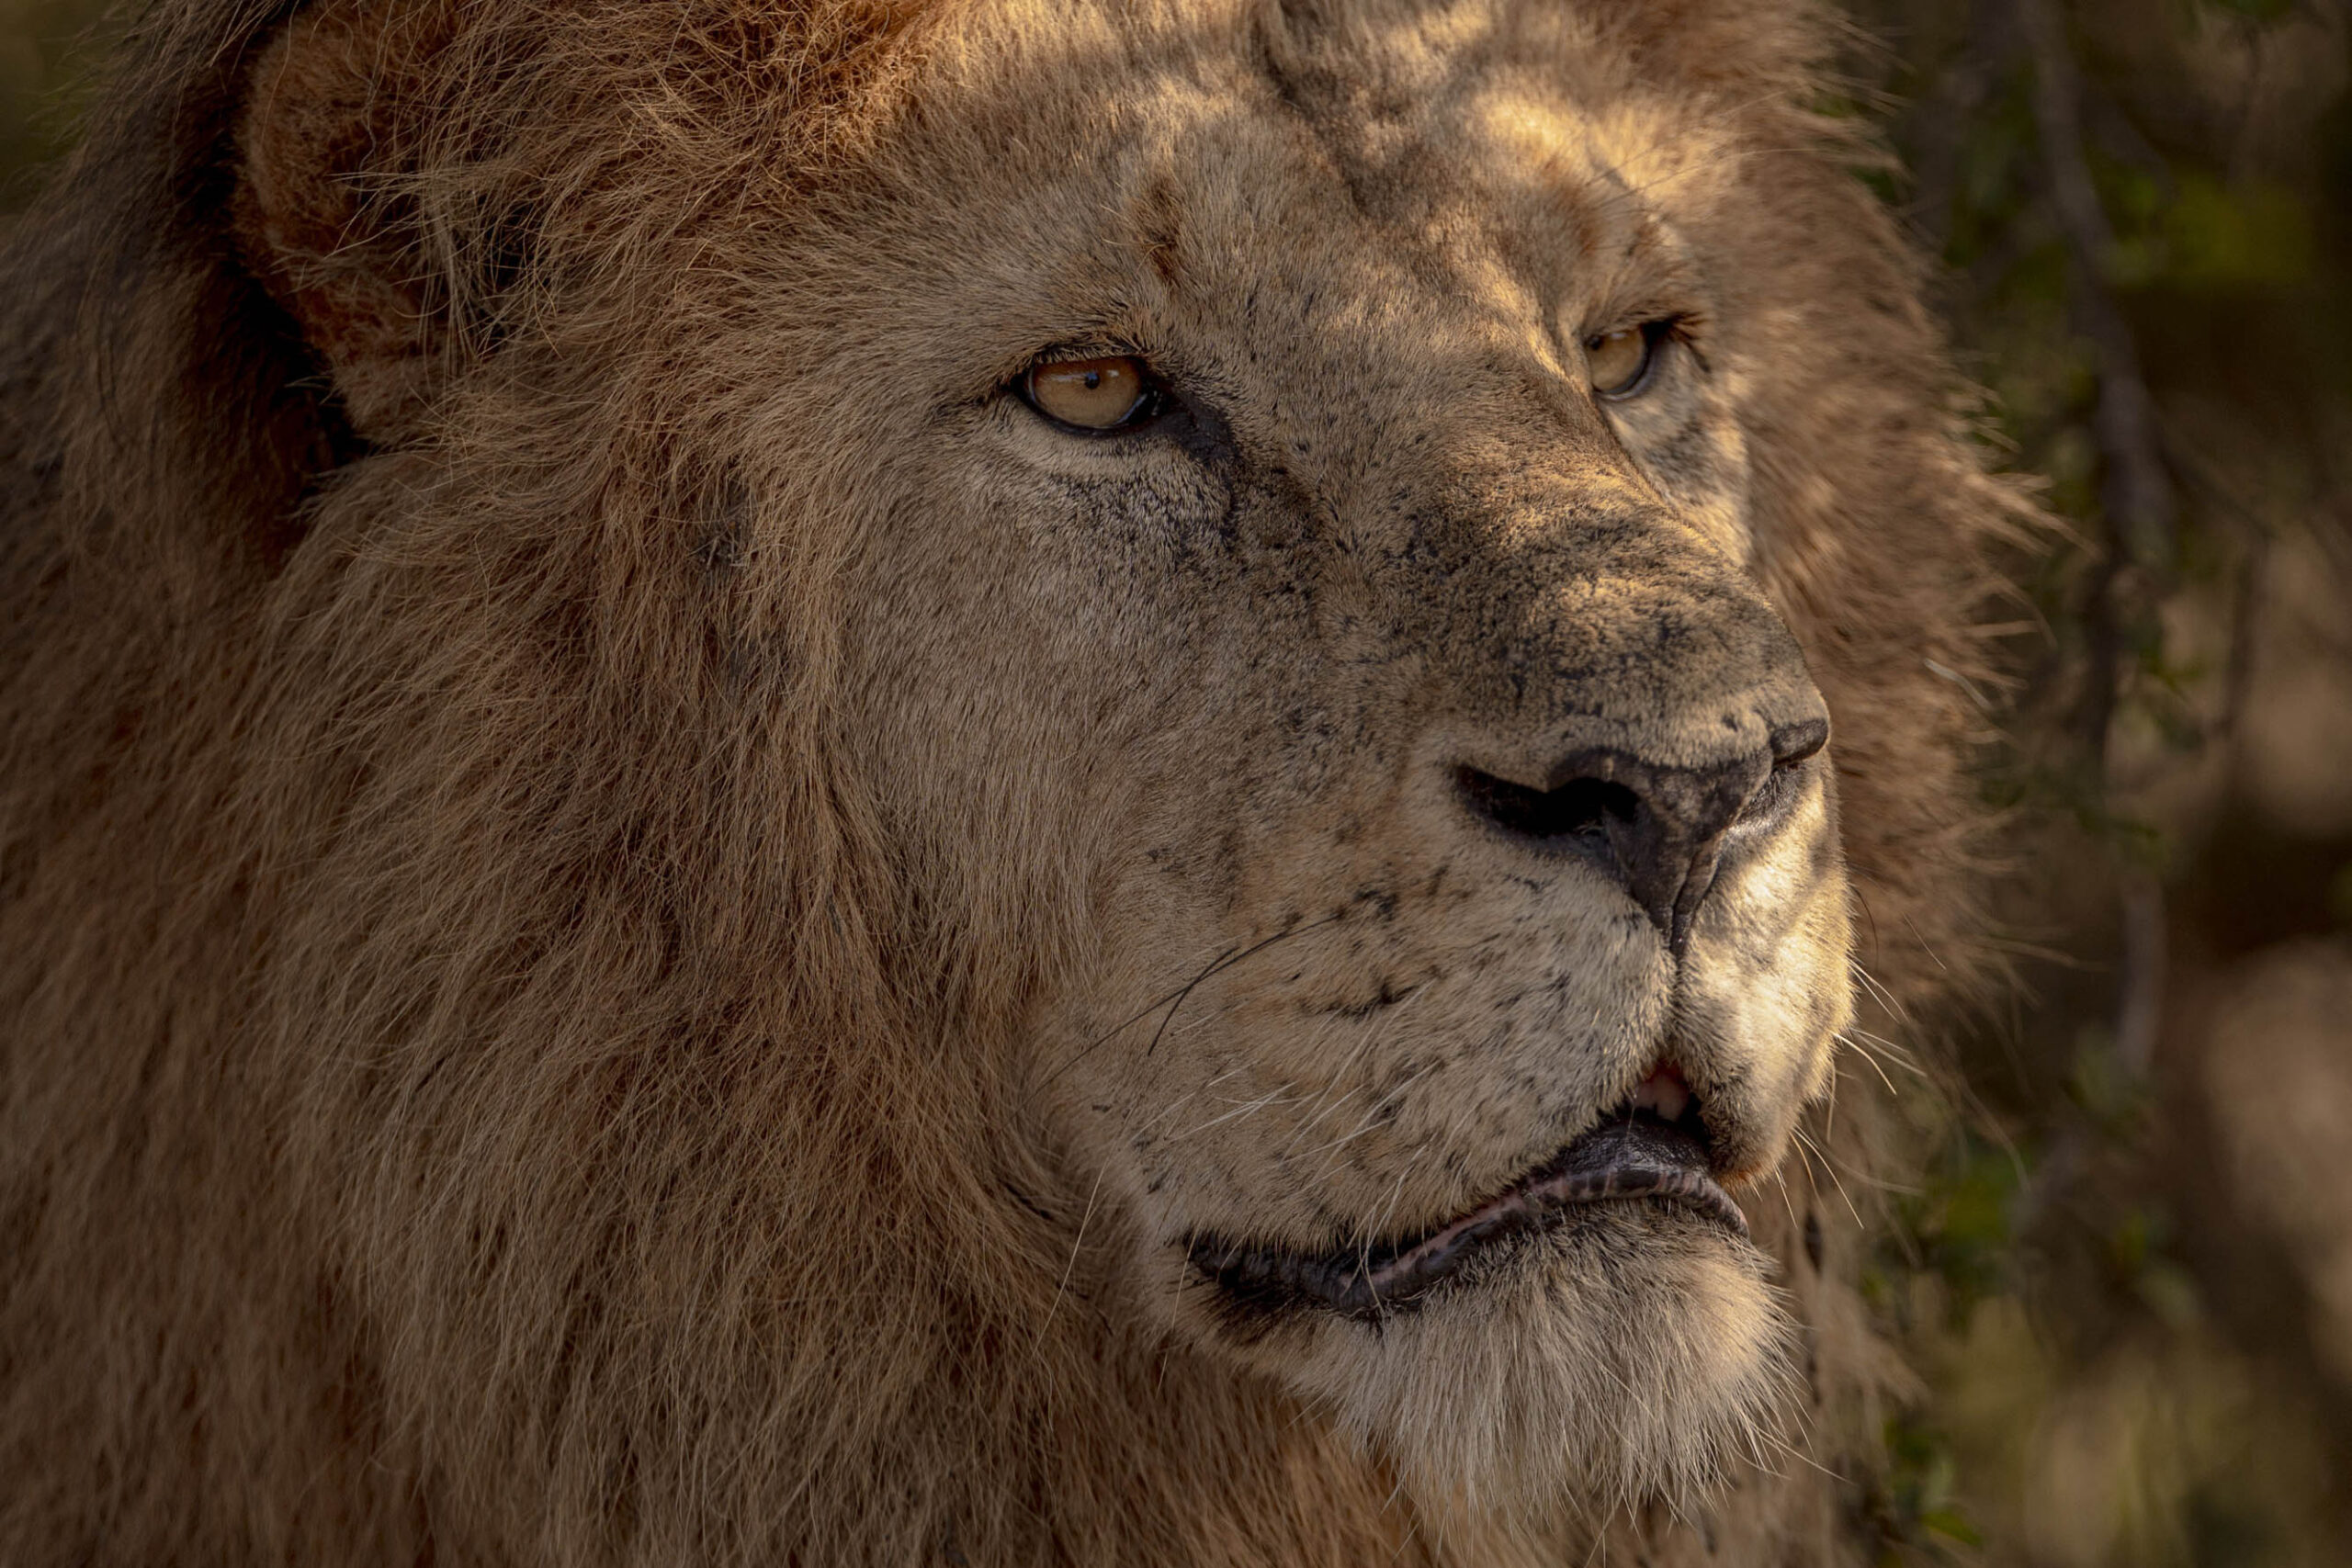 The lion, Kenya